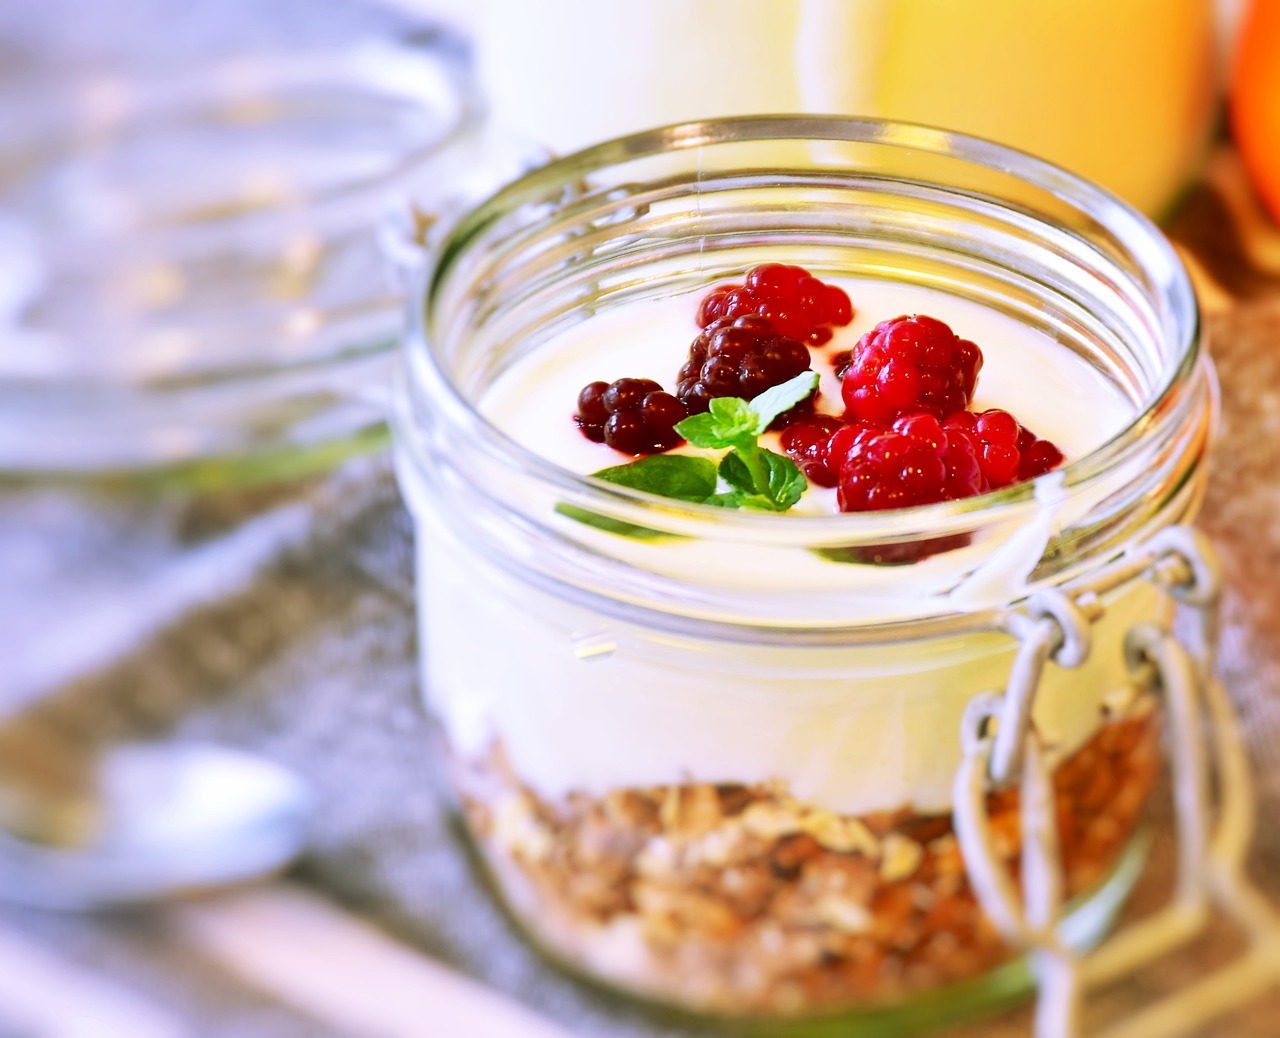 Mason jar with breakfast parfait of greek yoghurt, cereals, and berries